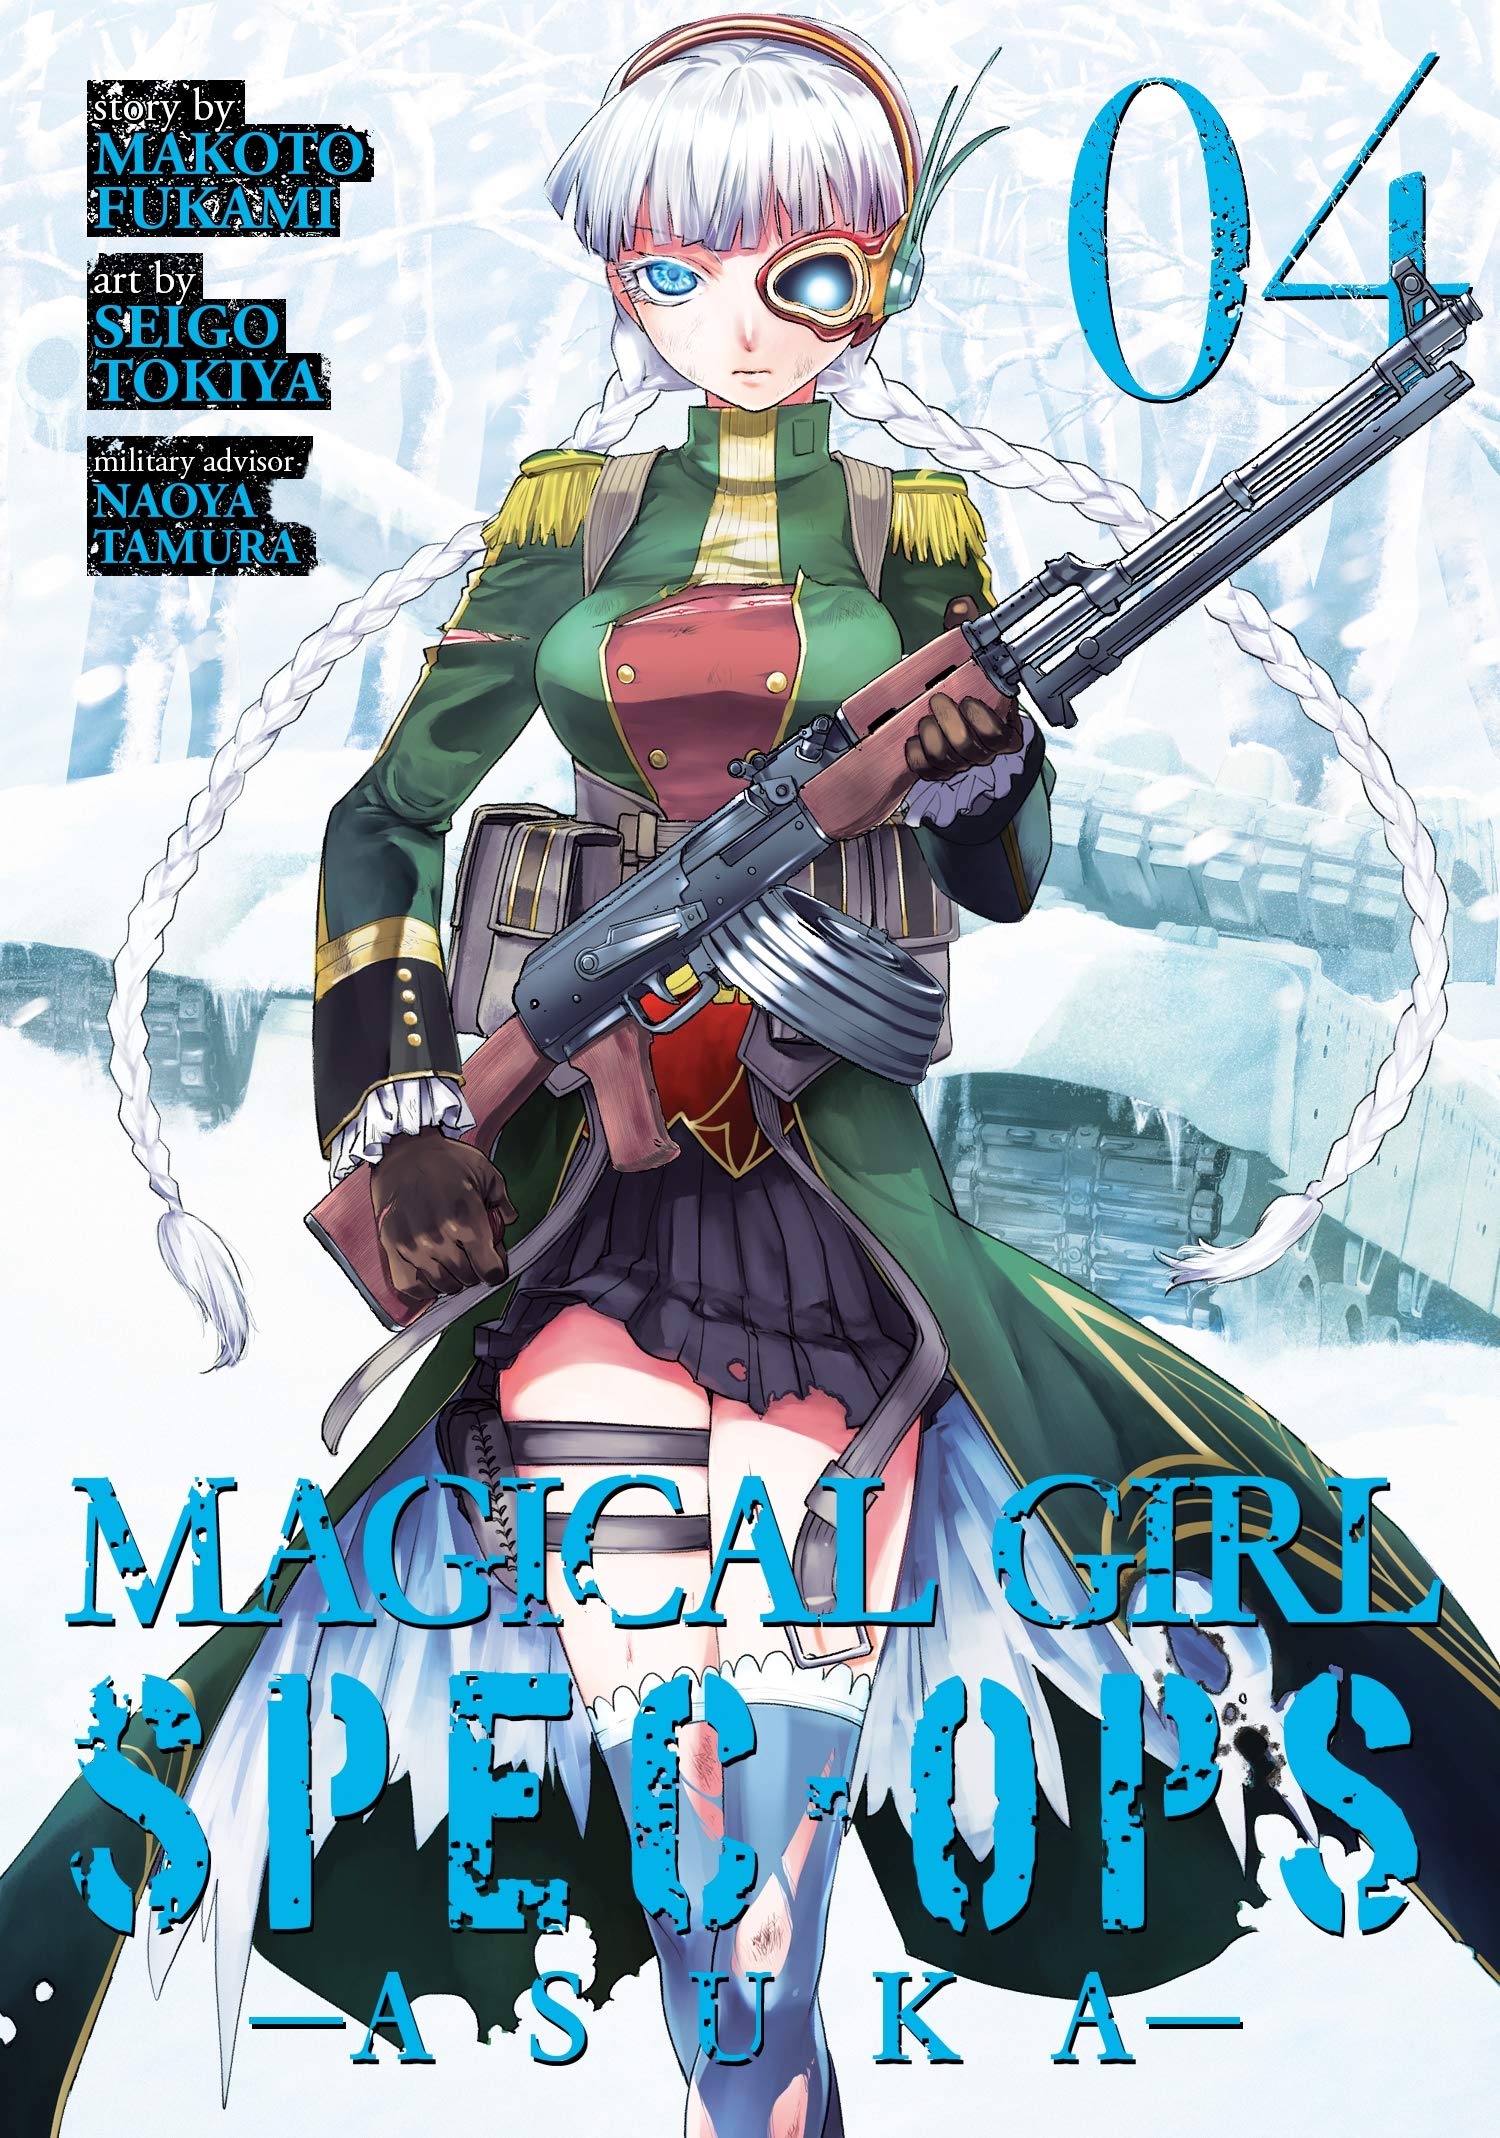 Magical Girl Special Ops Asuka Manga Ends on February 25 - News - Anime  News Network